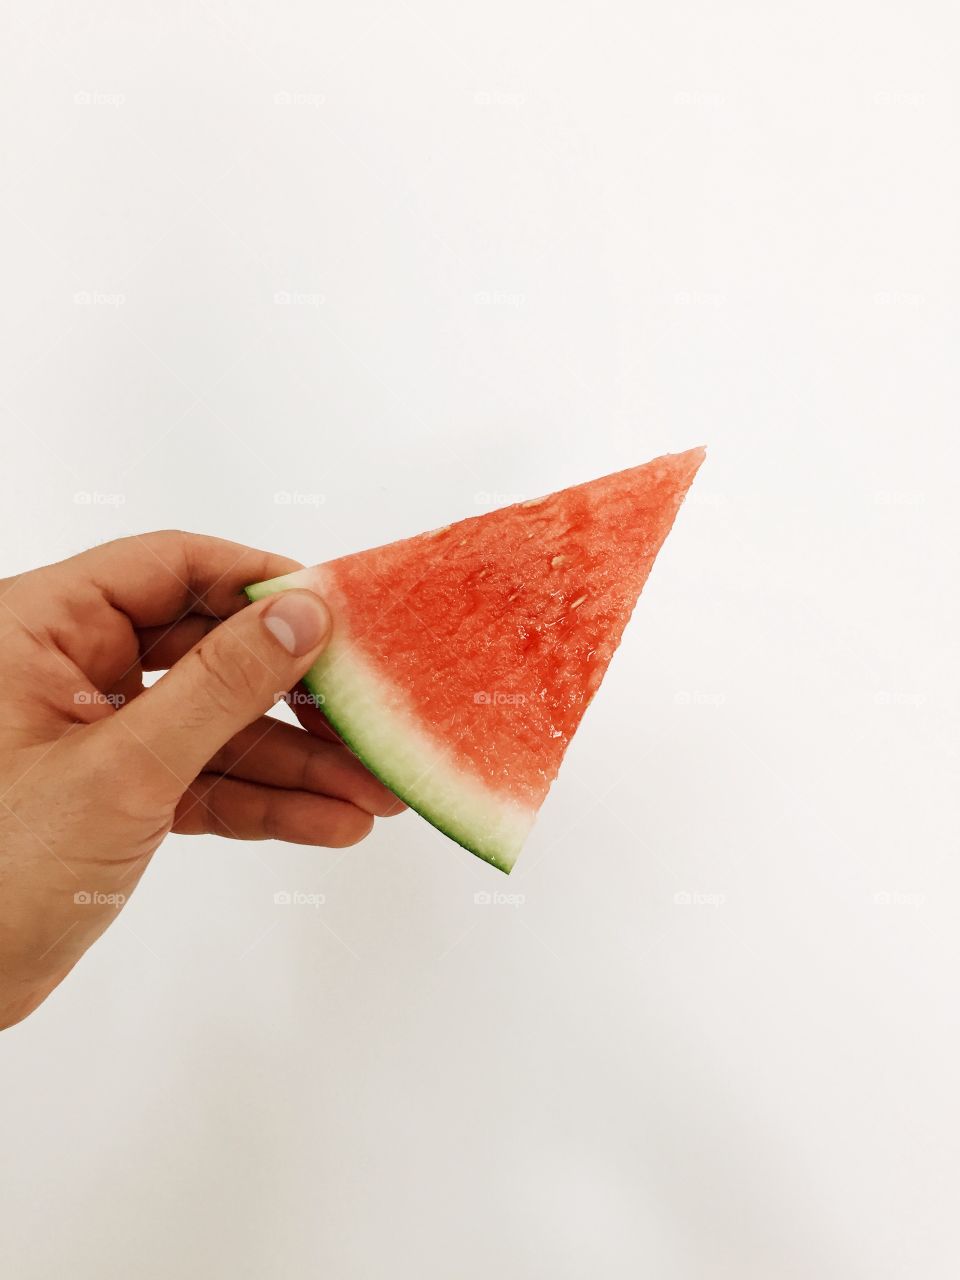 Hand holding watermelon slice